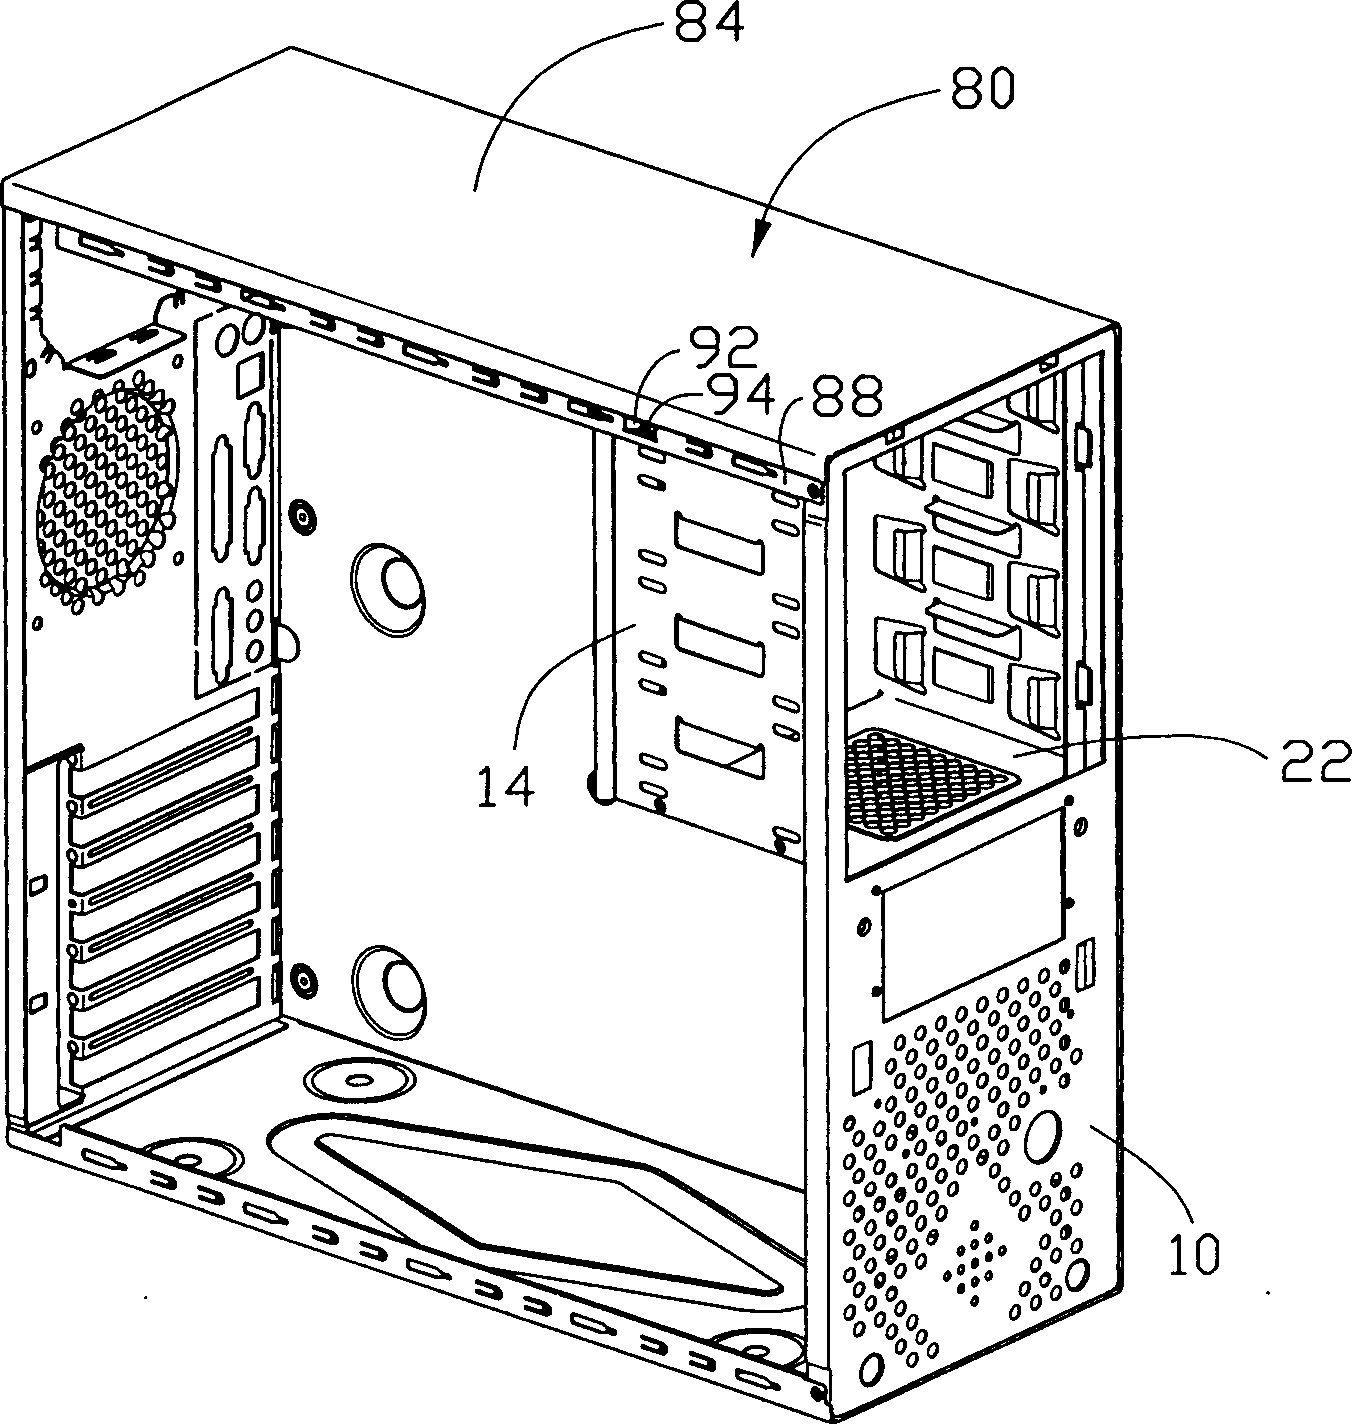 Computer casing